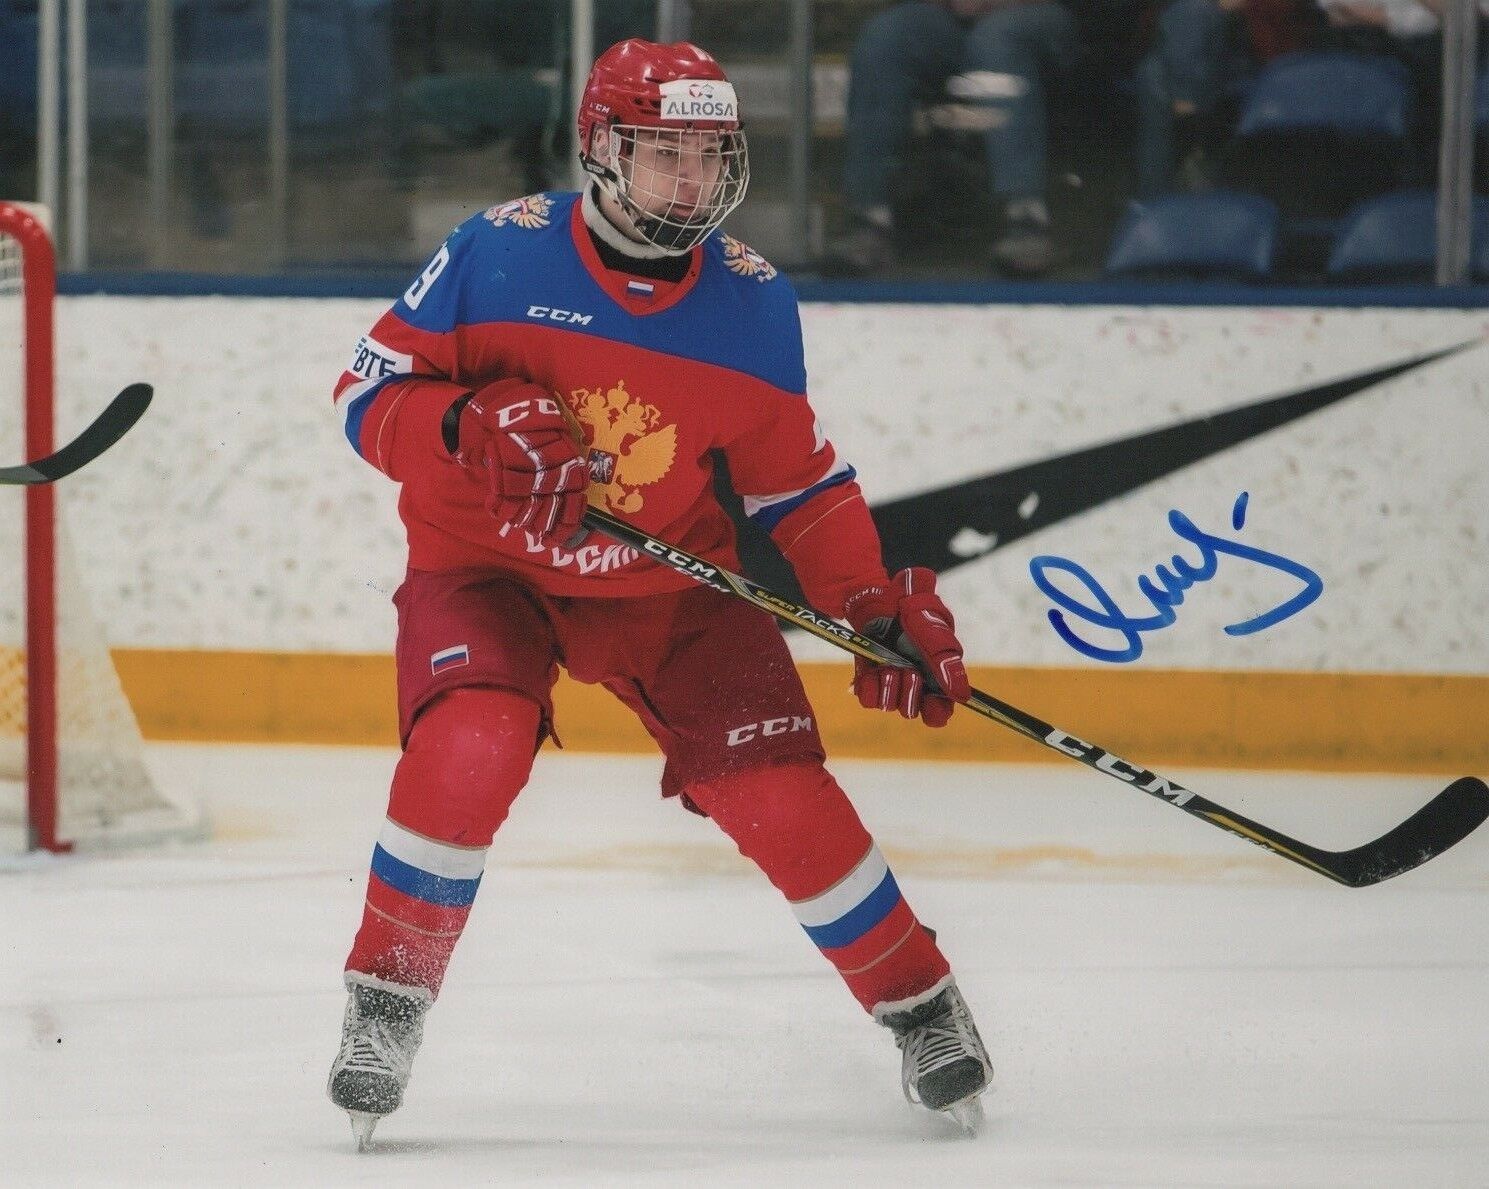 Russia Vasili Vasily Podkolzin Autographed Signed 8x10 IIHF Photo Poster painting COA #21